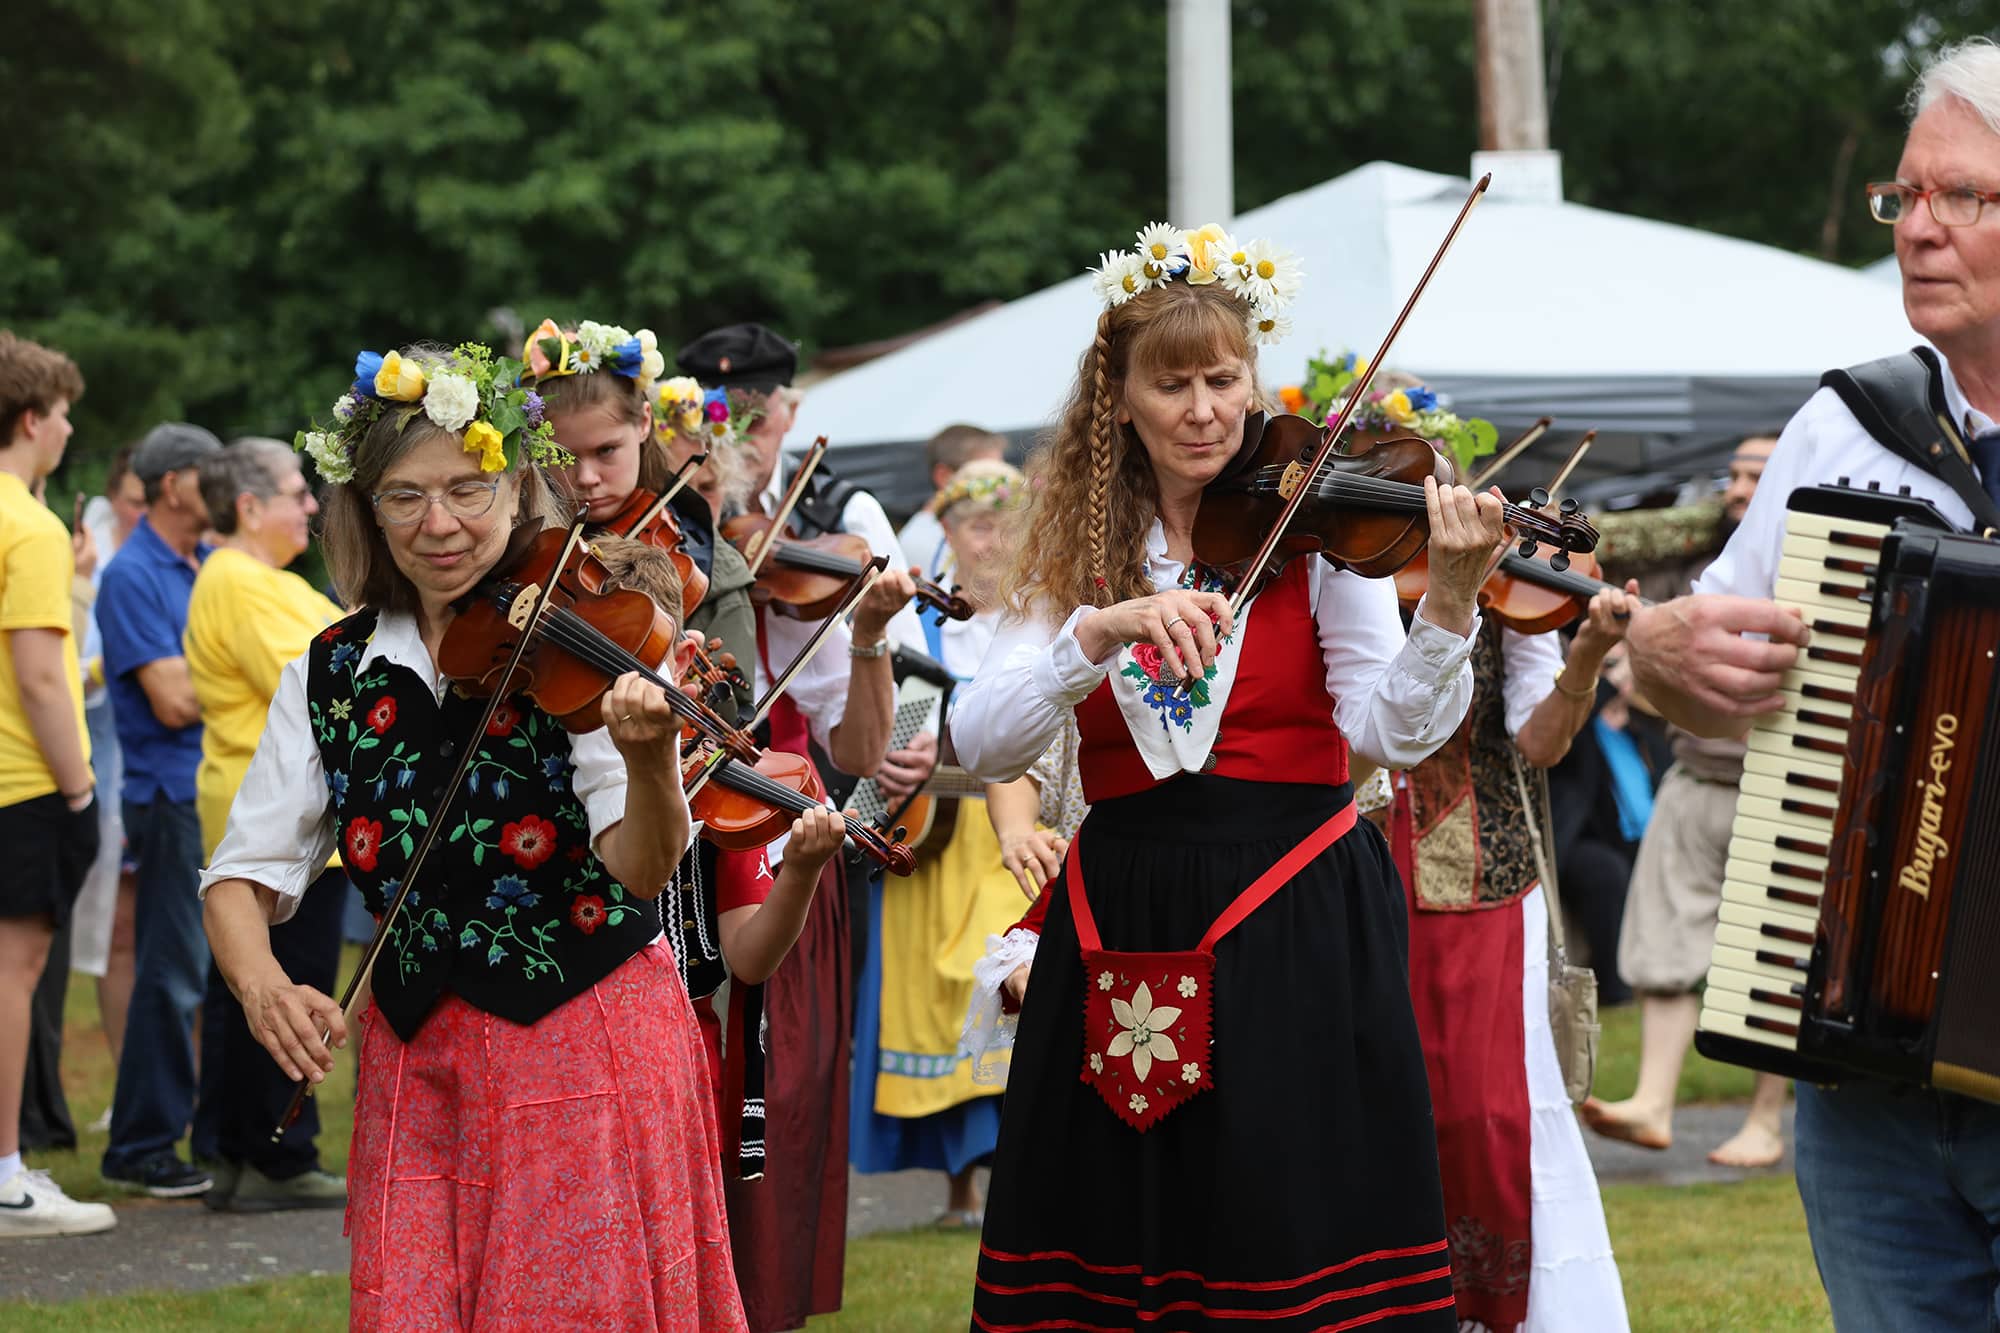 A Scandinavian celebration to welcome summer in Shrewsbury